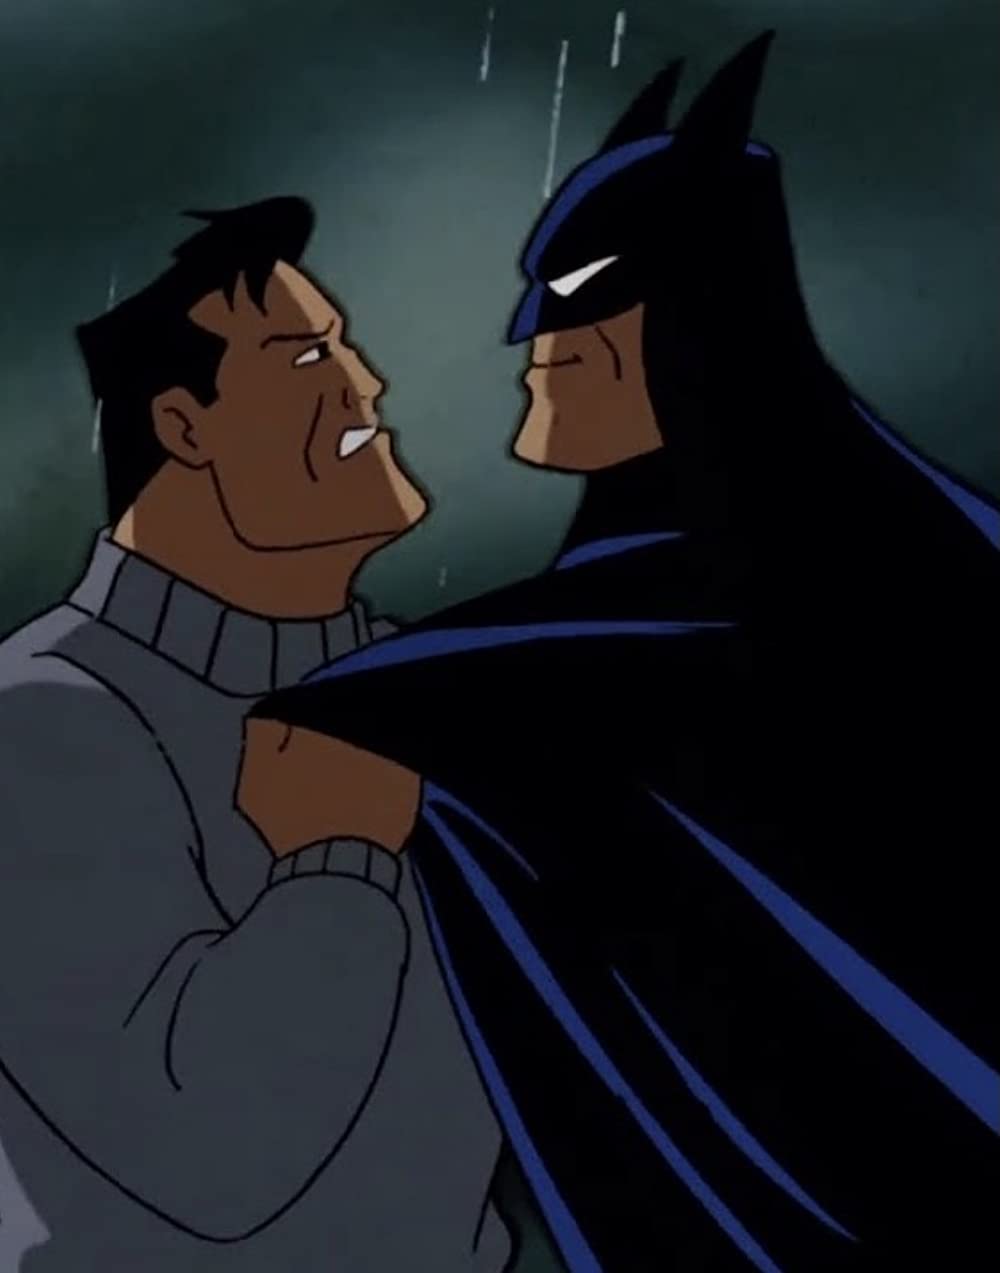 Life Without Batman [Suicidal Bruce Wayne]  - Perchance to Dream - Batman The Animated Series